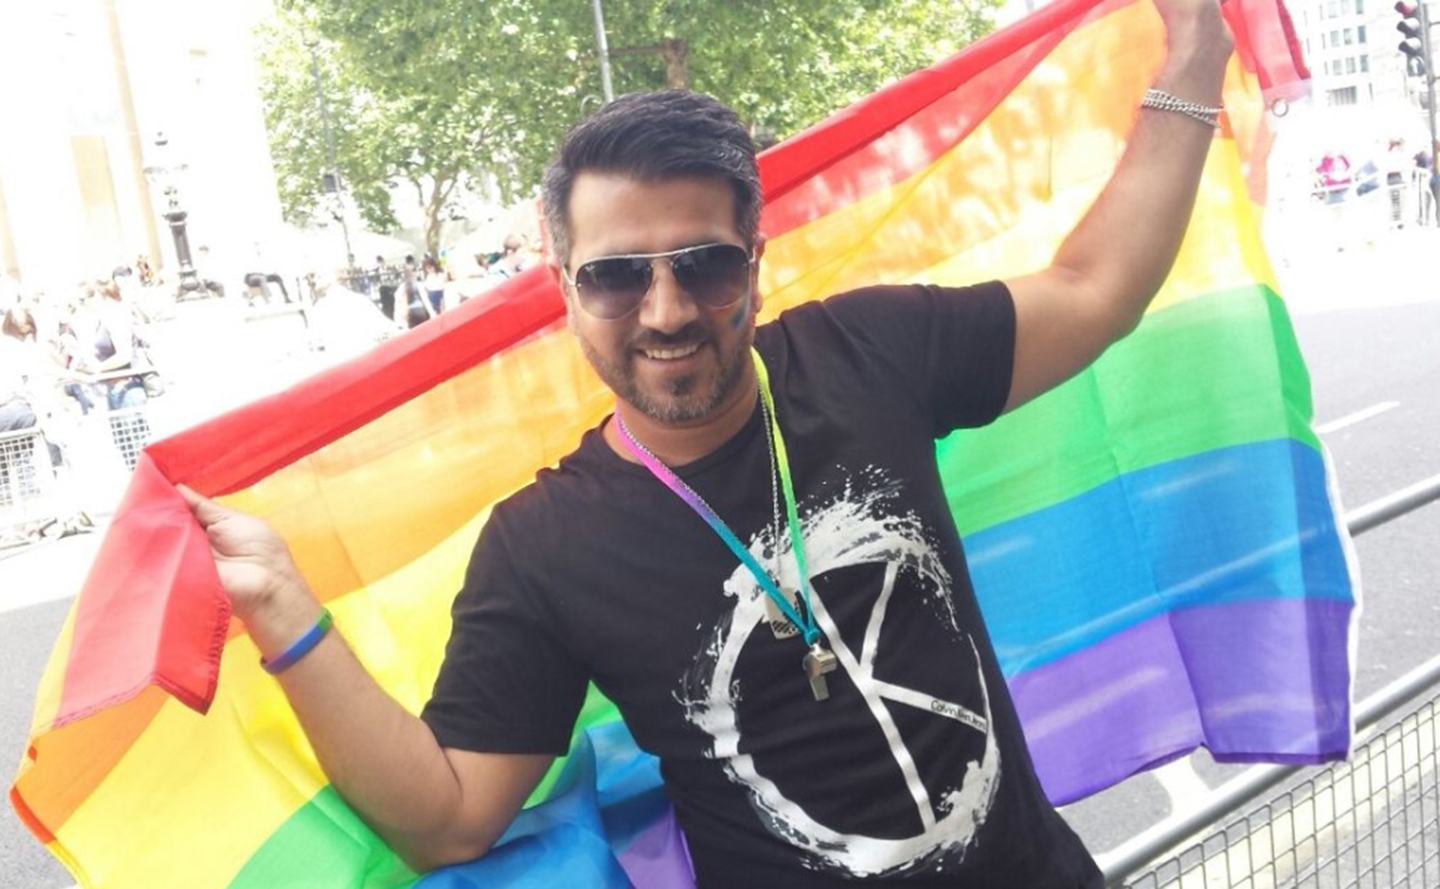 Mohammed leans against a railing, holding the LGBT rainbow flag